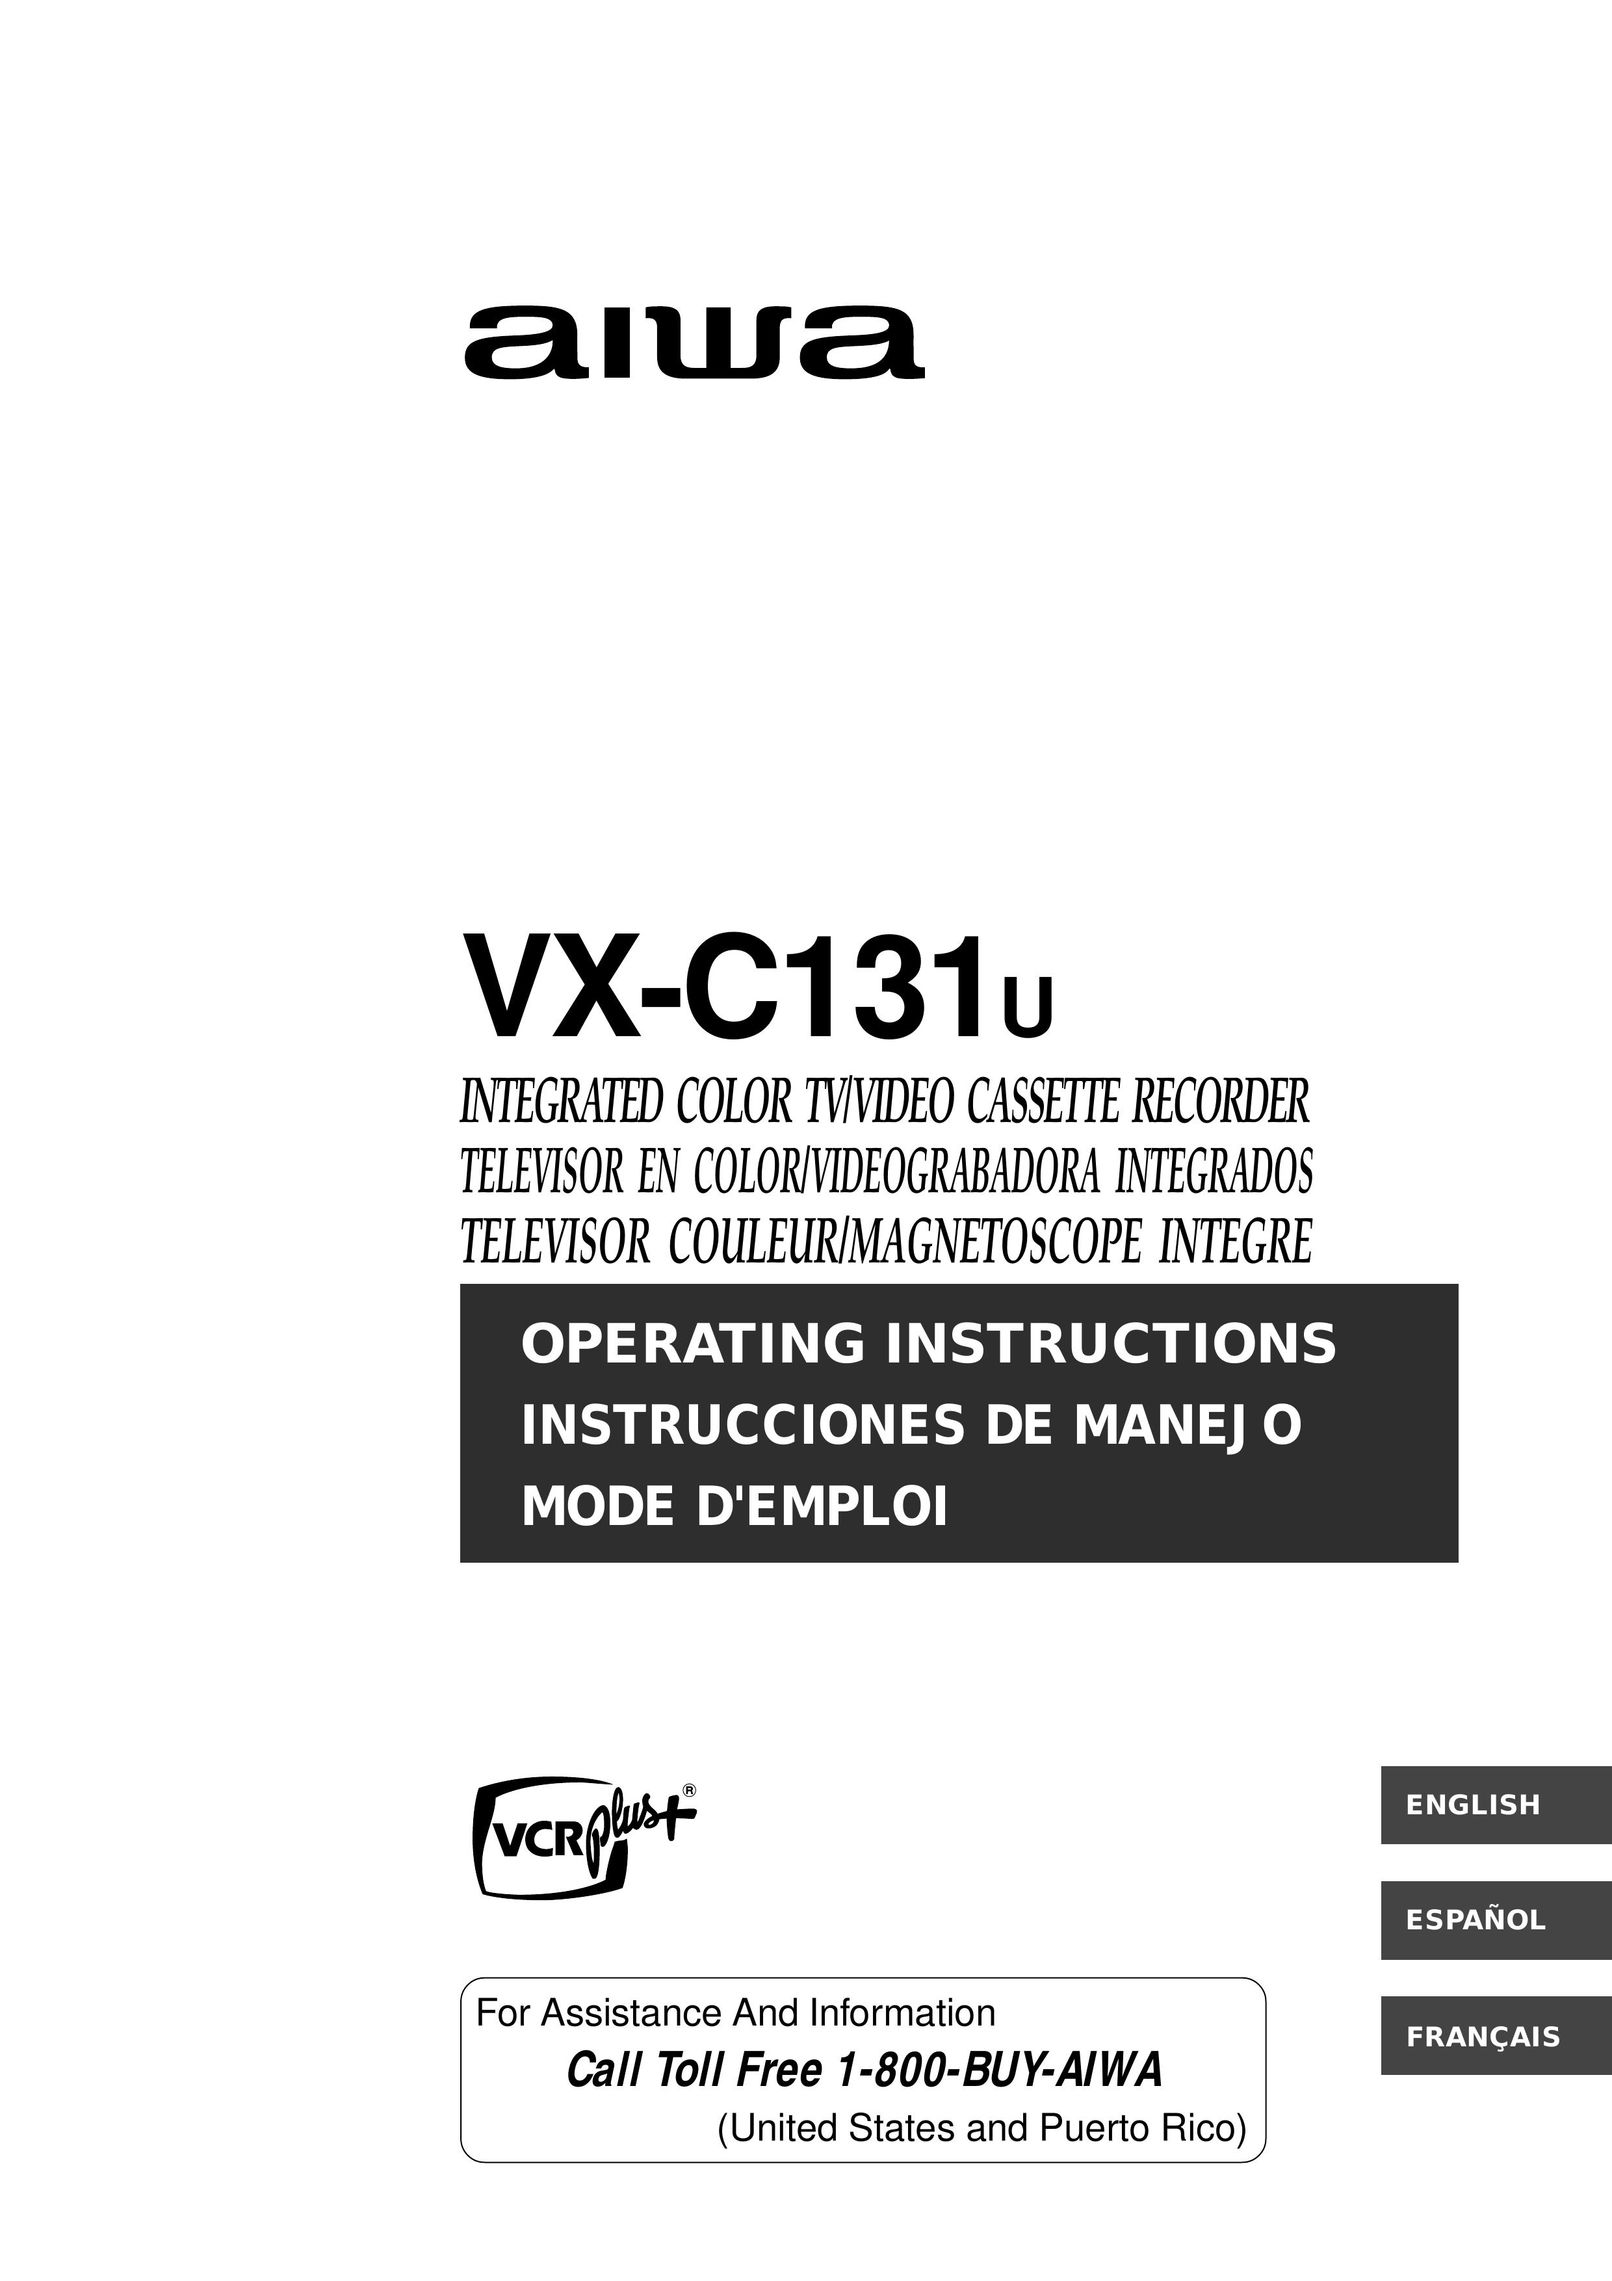 Aiwa VX-C131U VCR User Manual